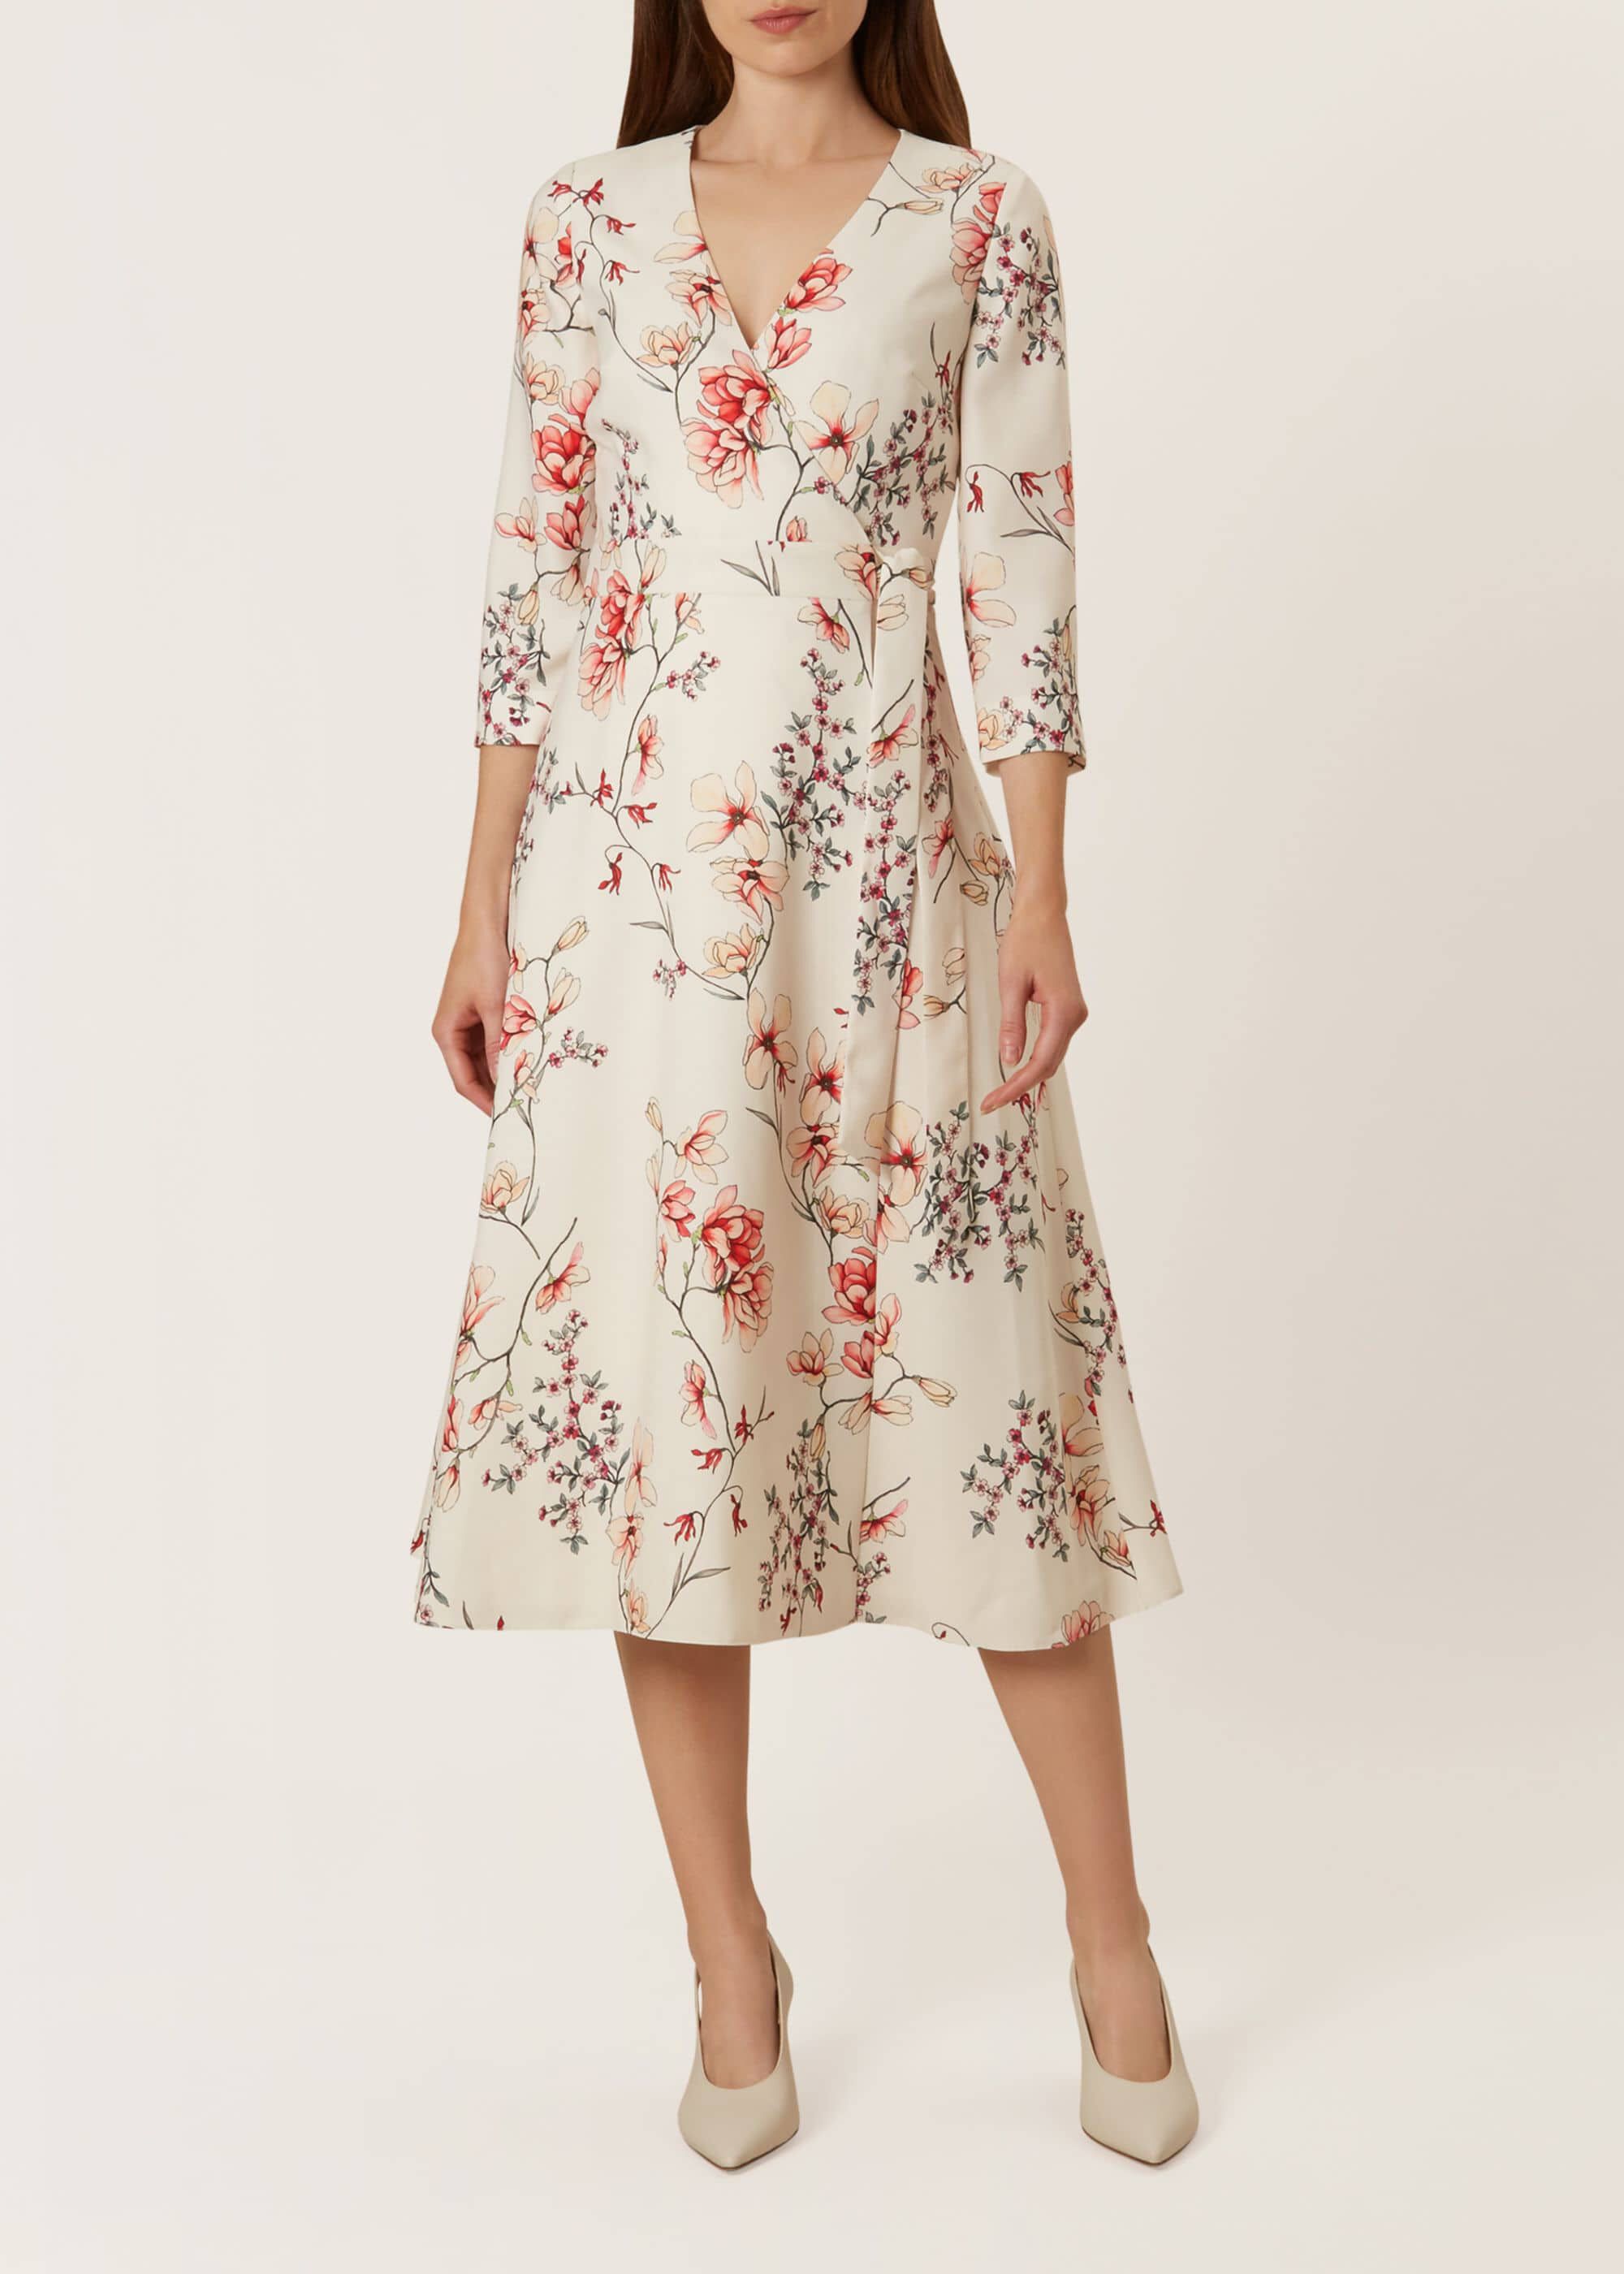 Hobbs Floral Catherine Dress Midi Wrap Dress 3/4 Sleeve | eBay